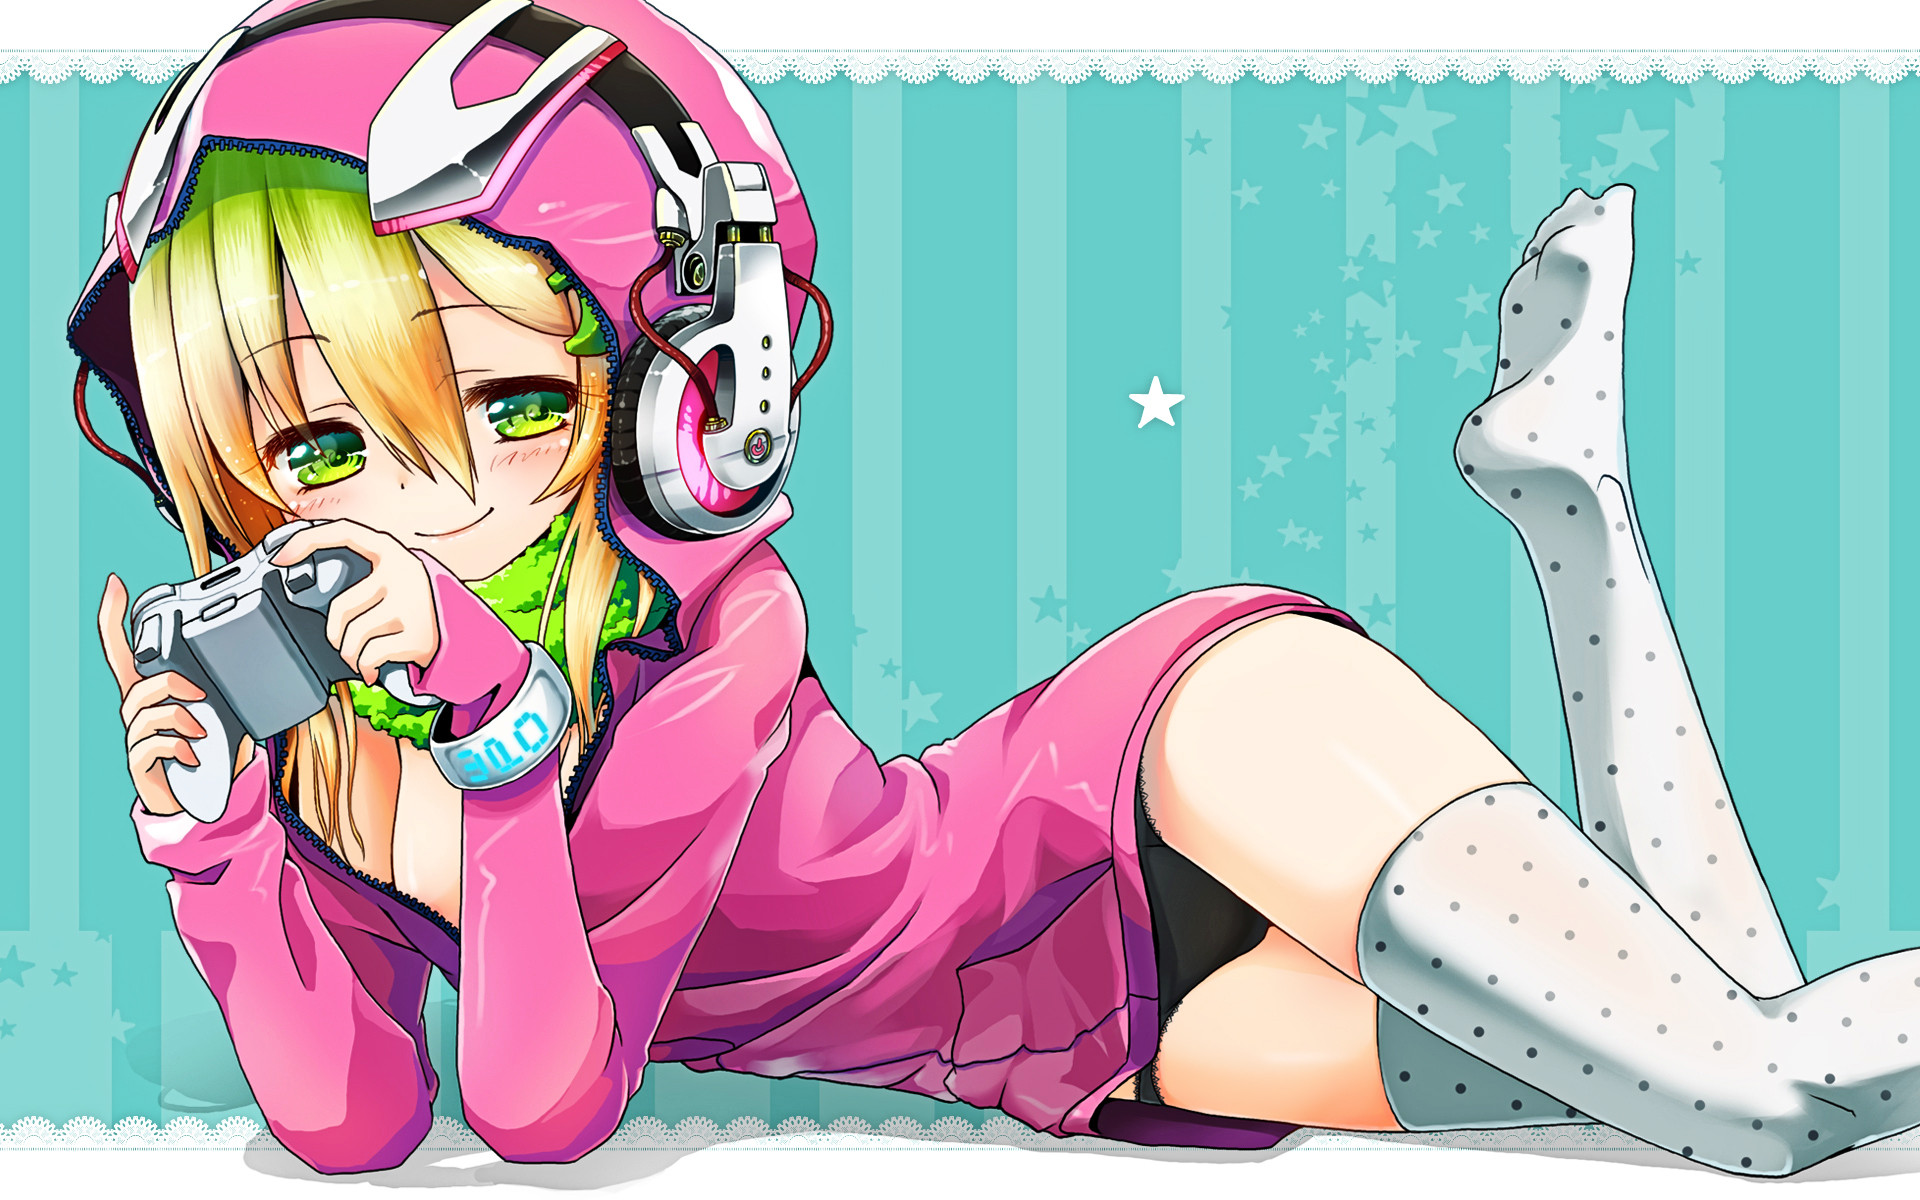 anime gamer girl loli   Imgur 1920x1200